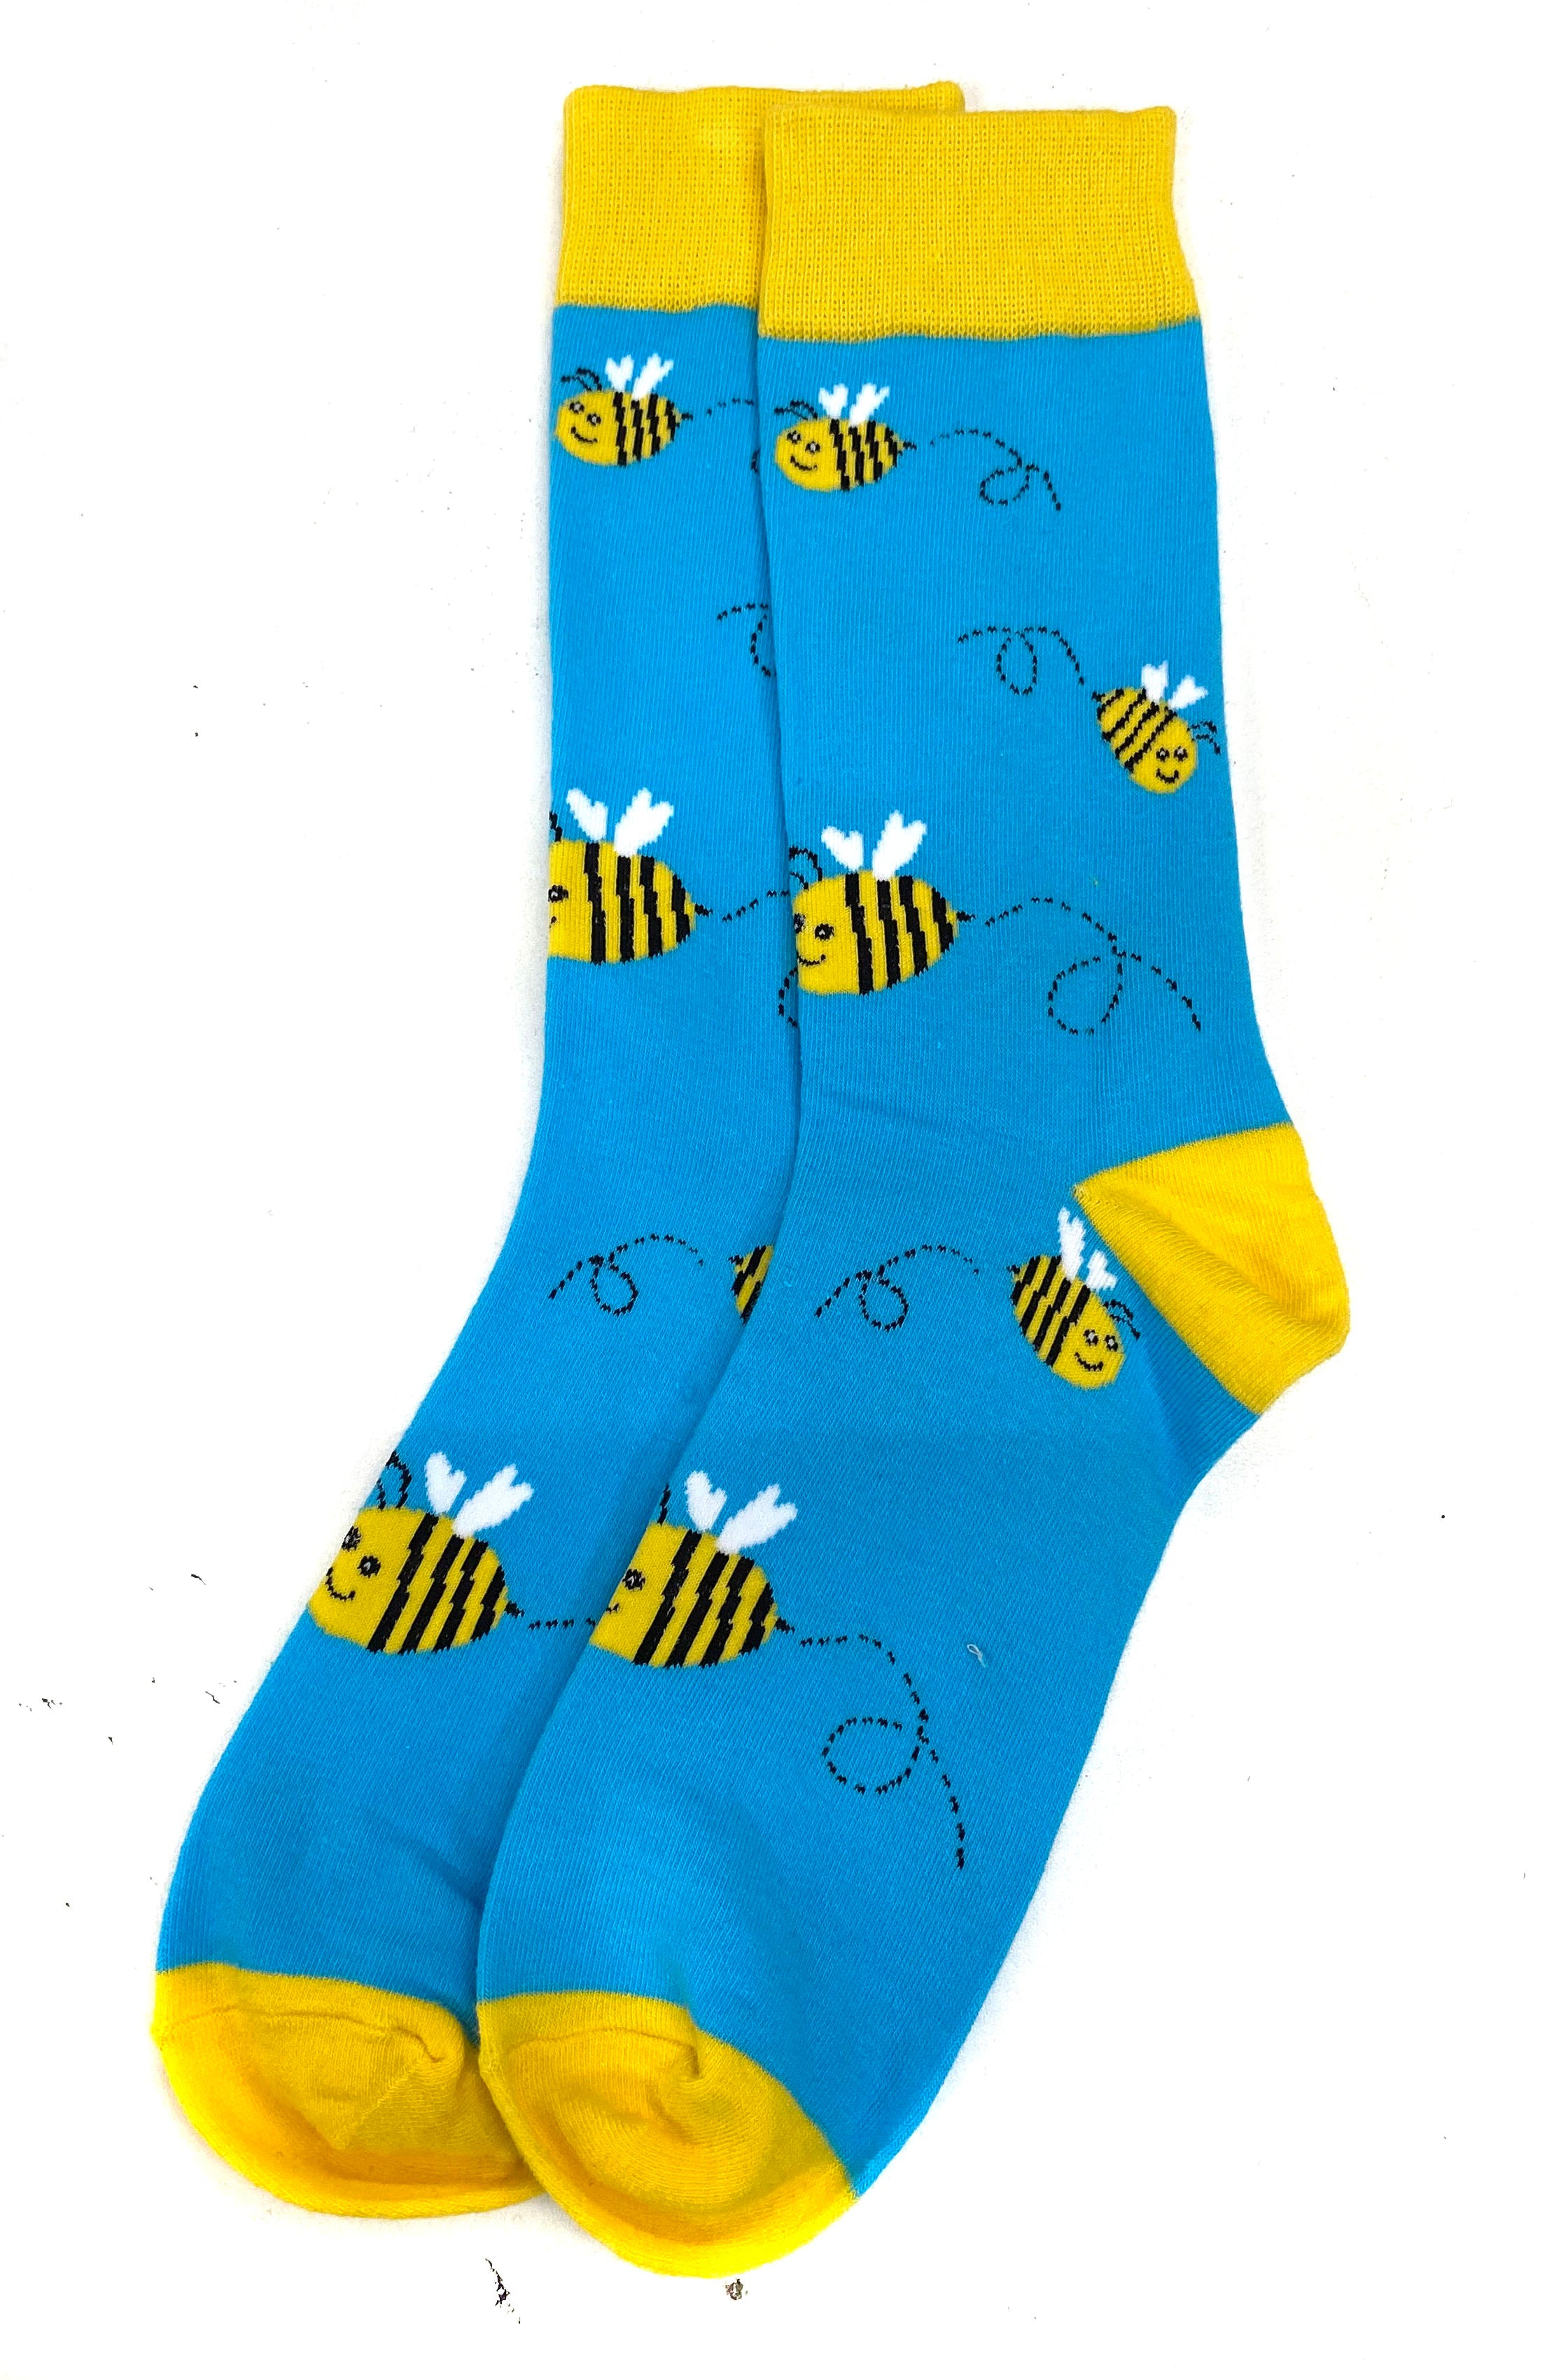 Busy Bee Socks, Yellow & Light Blue - Well Done Goods, by Cyberoptix